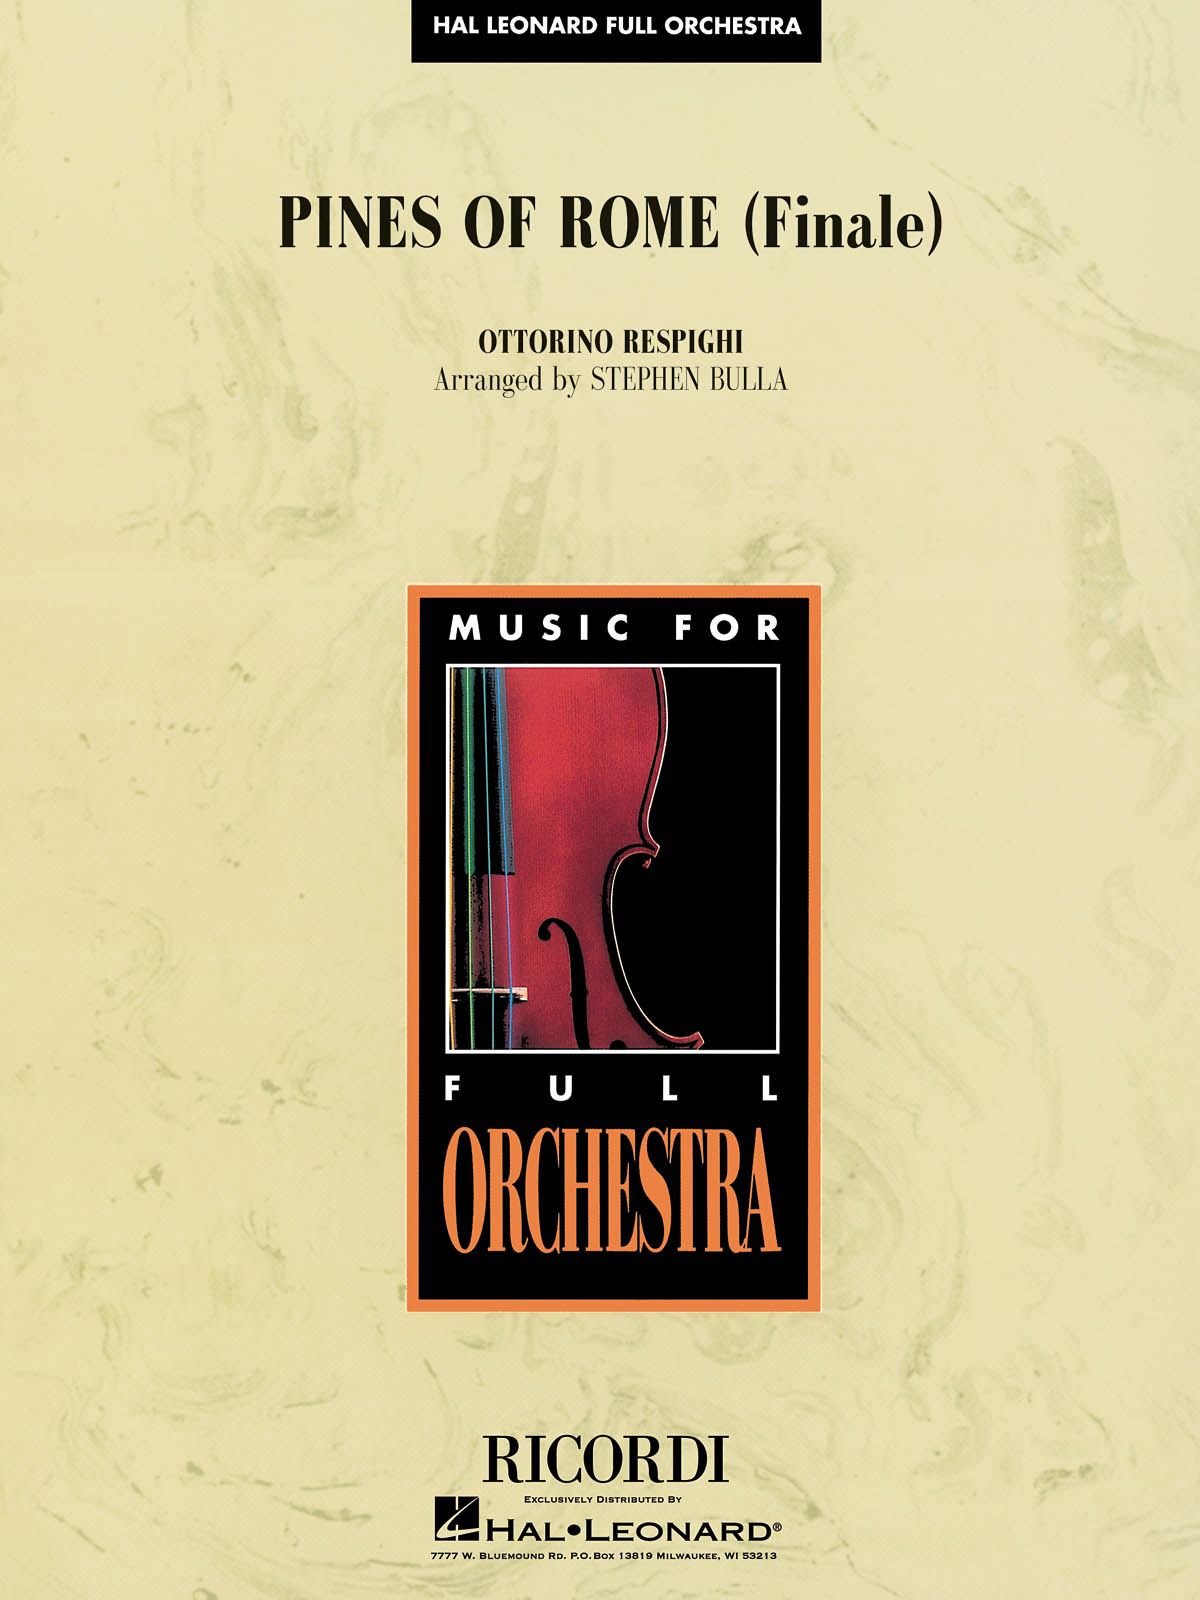 Ottorino Respighi: The Pines of Rome (Finale): Orchestra: Score & Parts